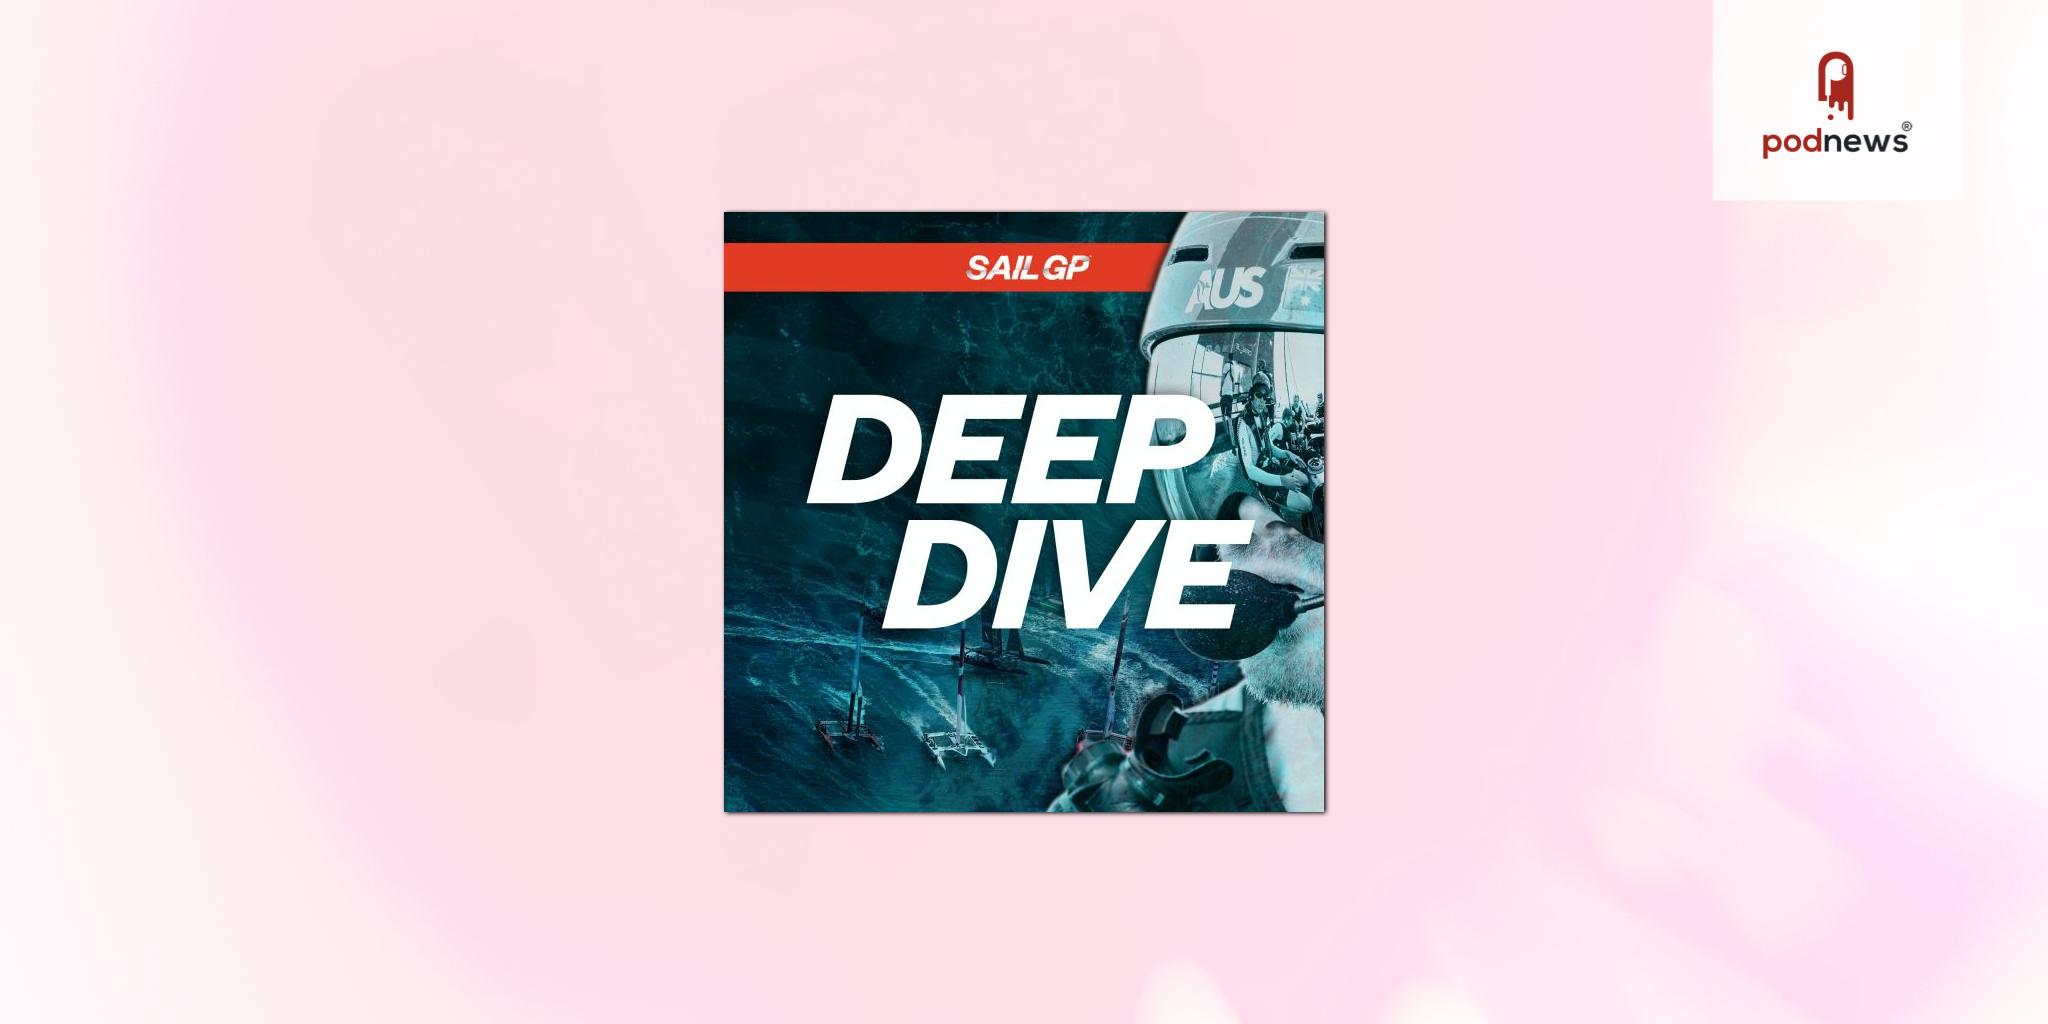 Global sailing league SailGP launches Deep Dive podcast for 2022 championship